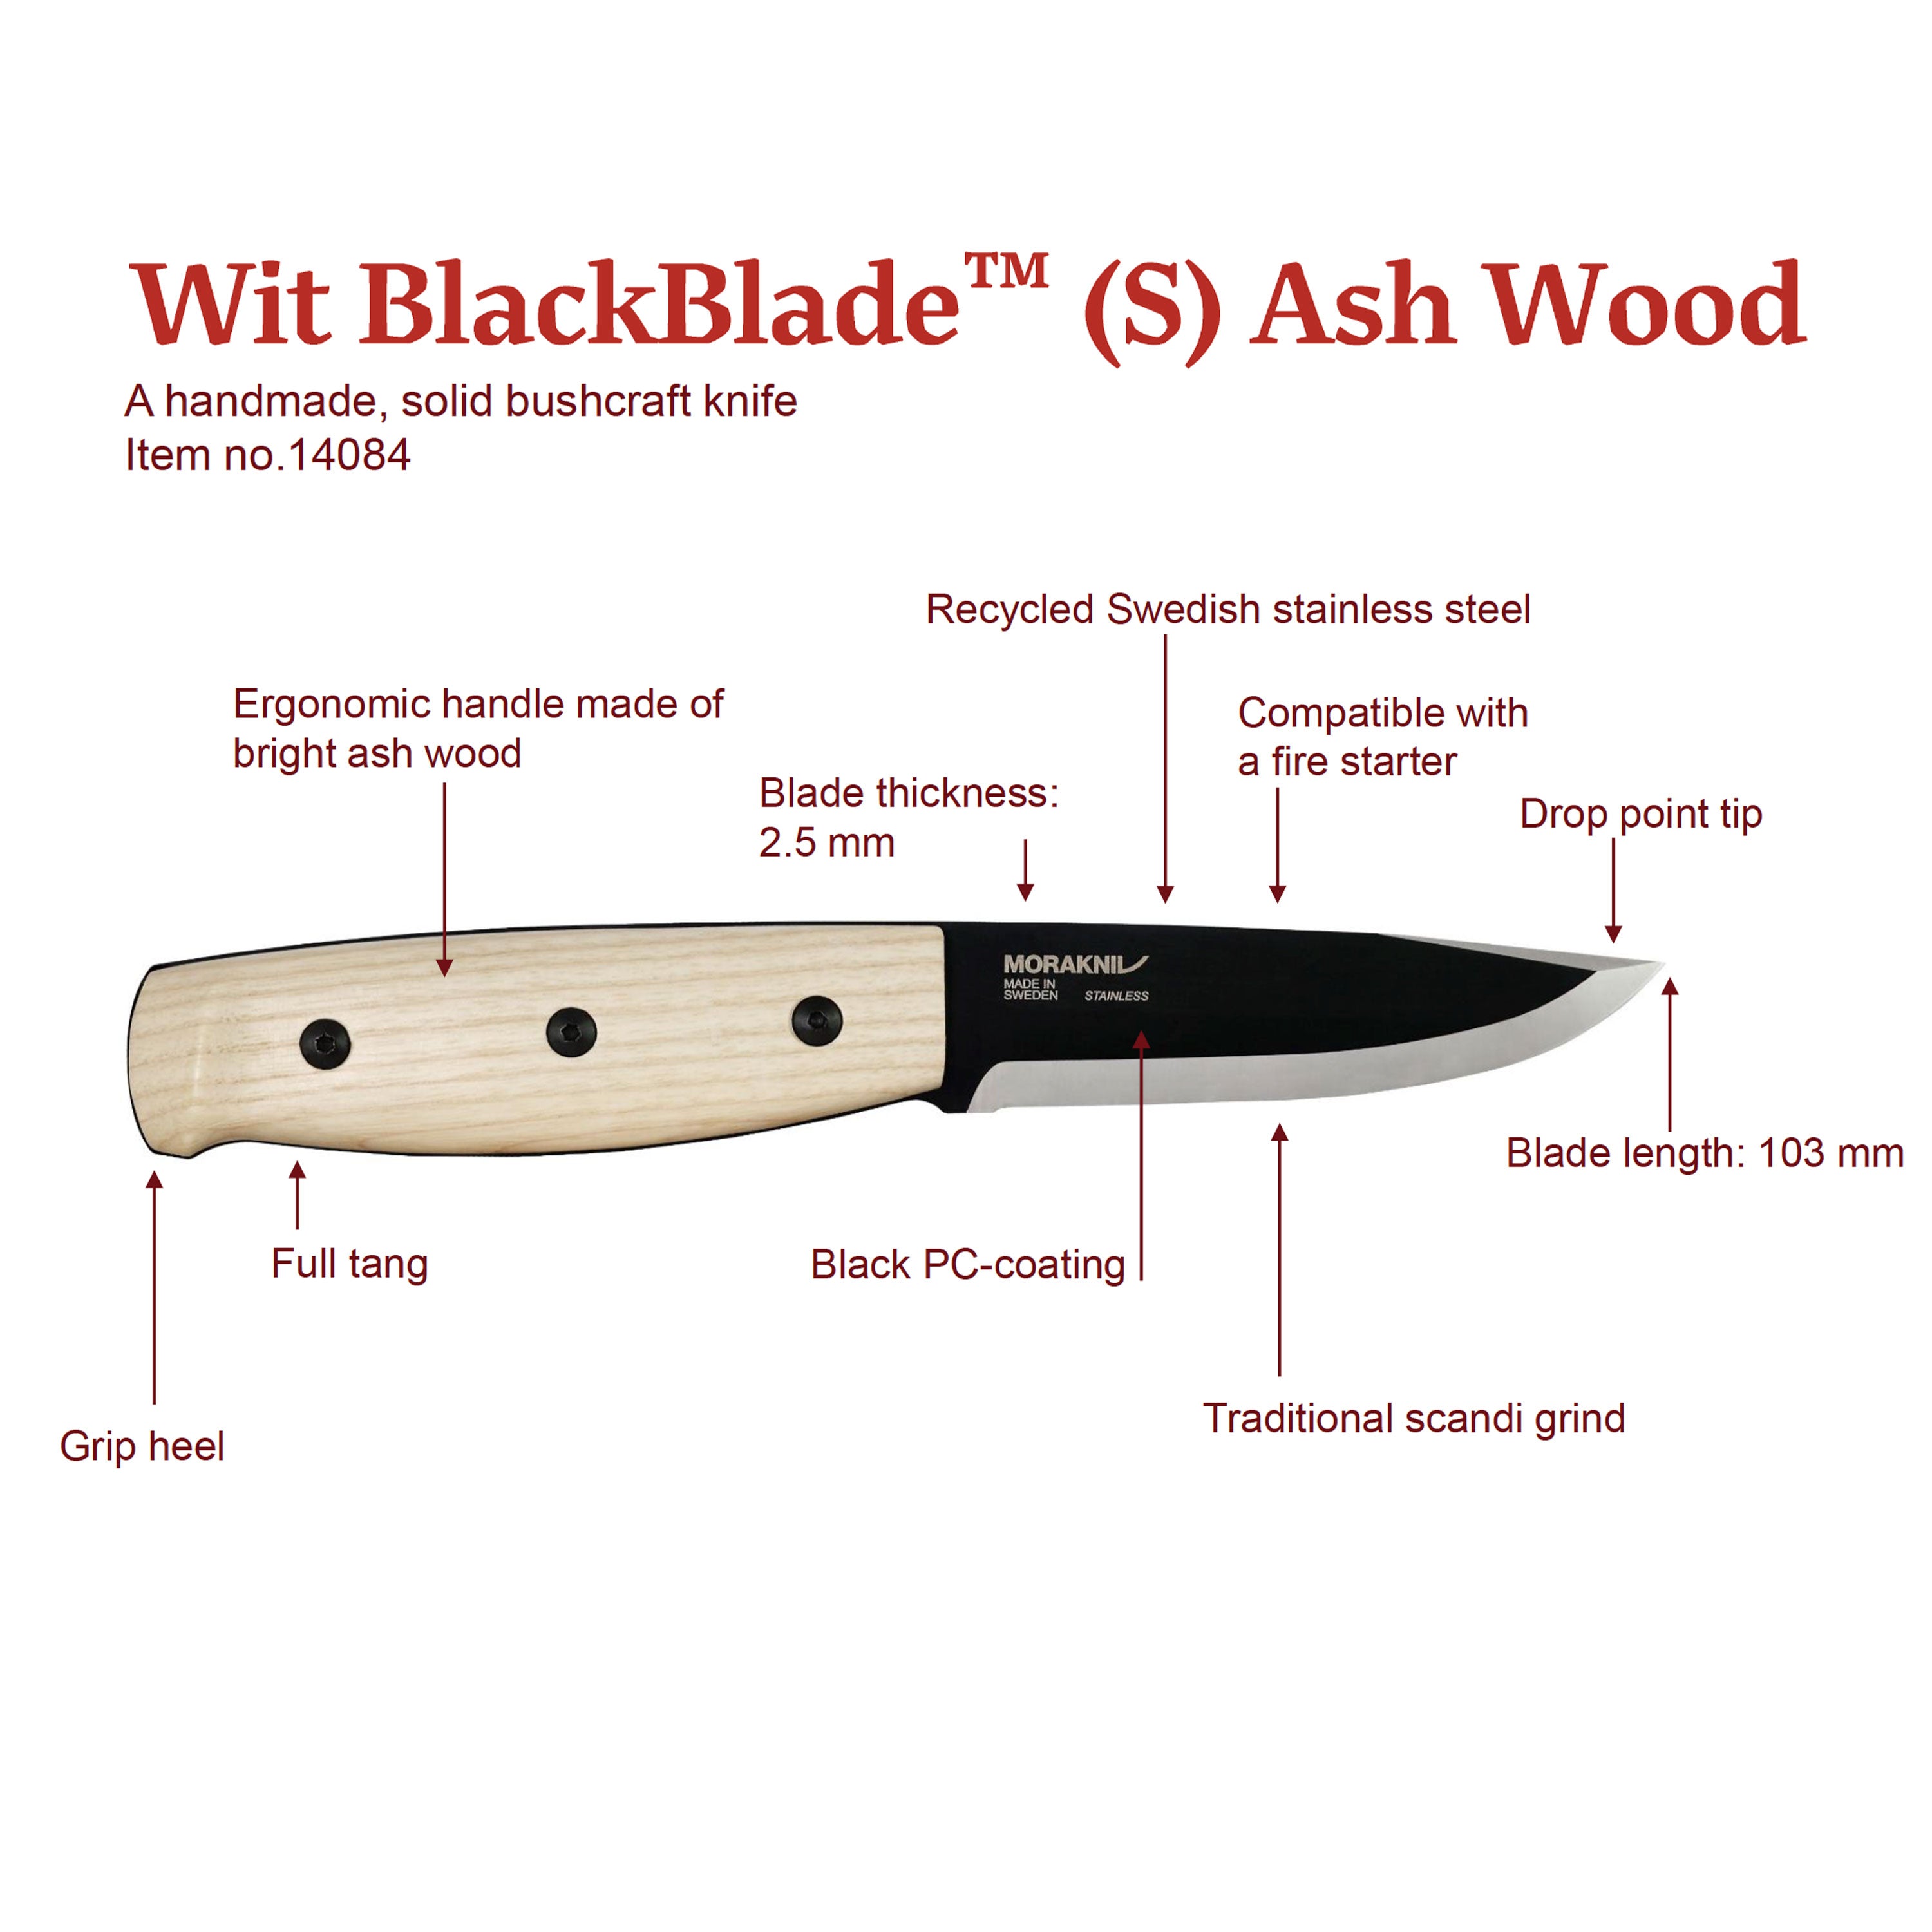 WIT Blackblade (S) Ash Wood